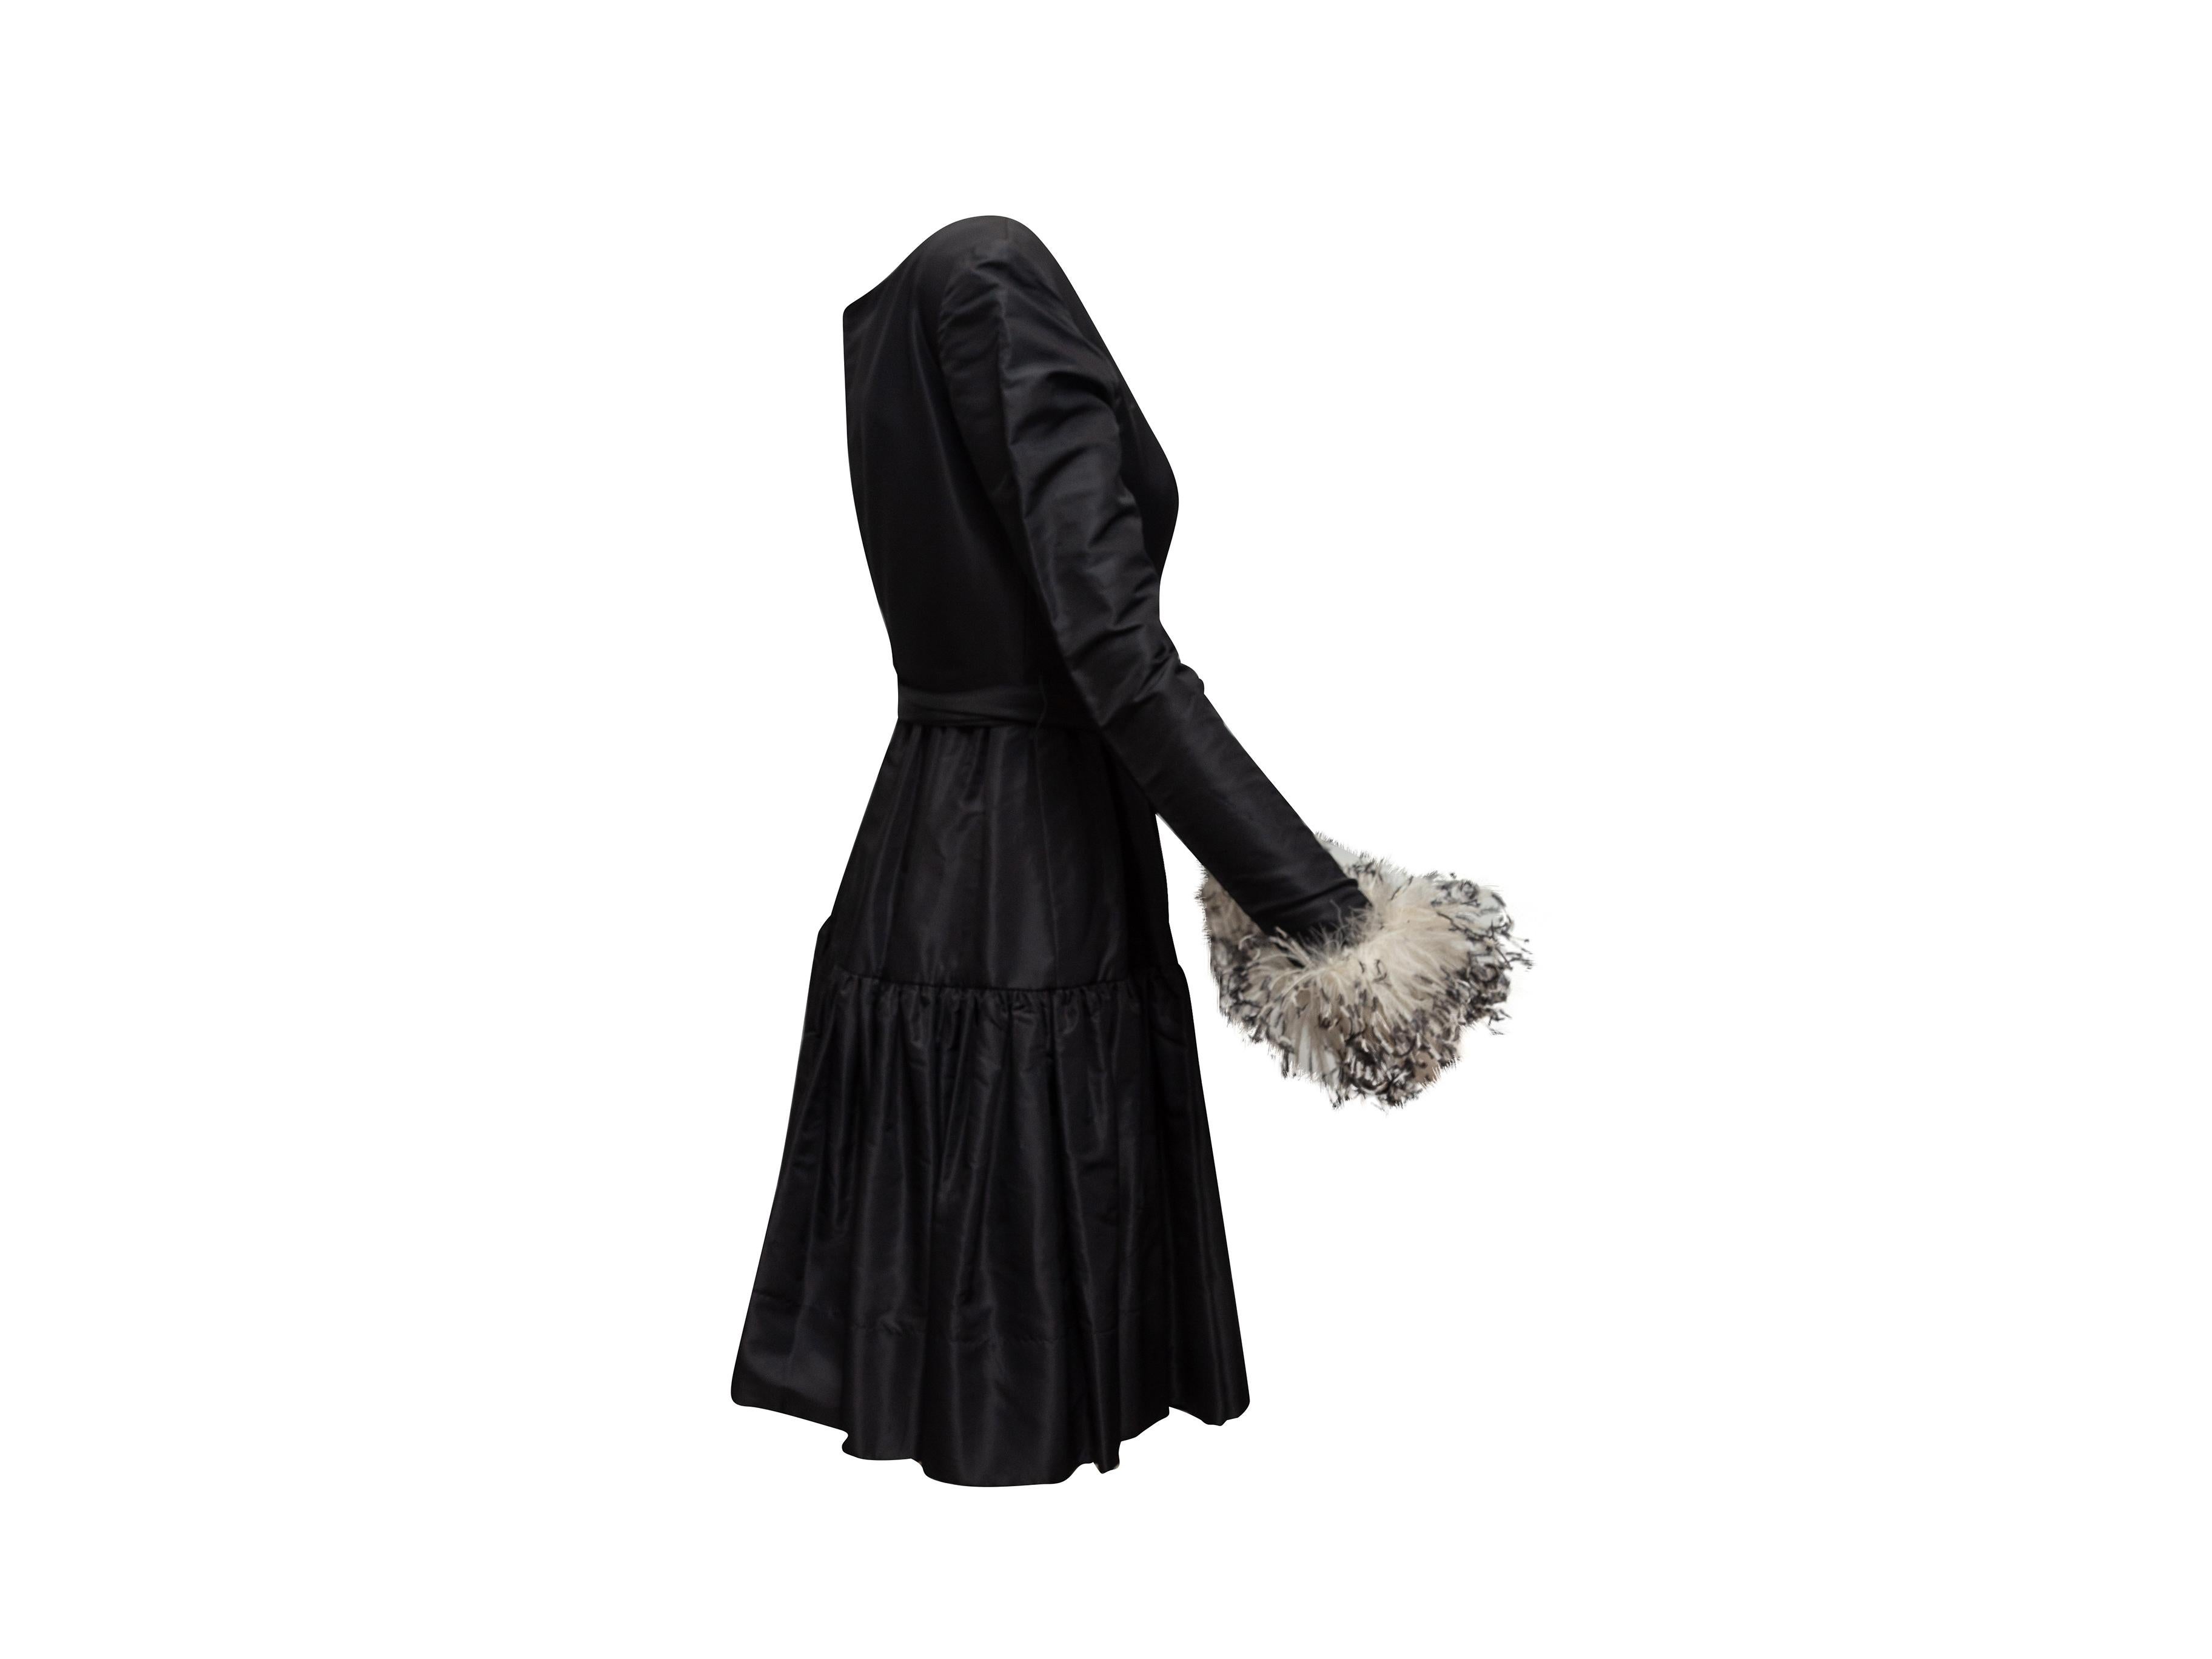 Product details: Vintage black A-line dress by Oscar de la Renta. Scoop neck. Long sleeves featuring feather trim. Sash tie at waist. Zip closure at back. 34